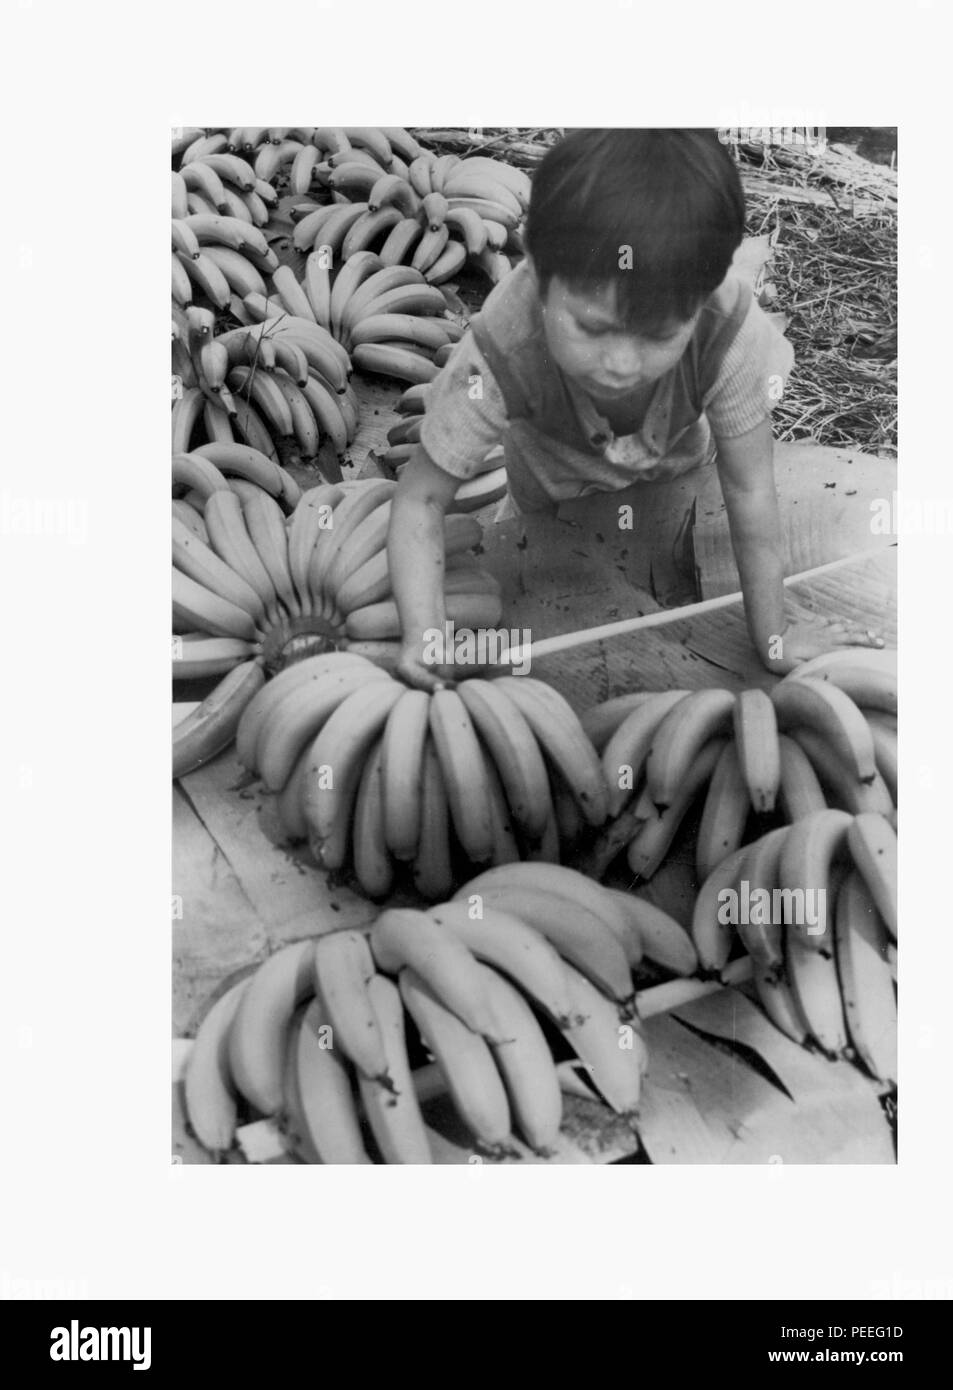 Child with bananas. Stock Photo